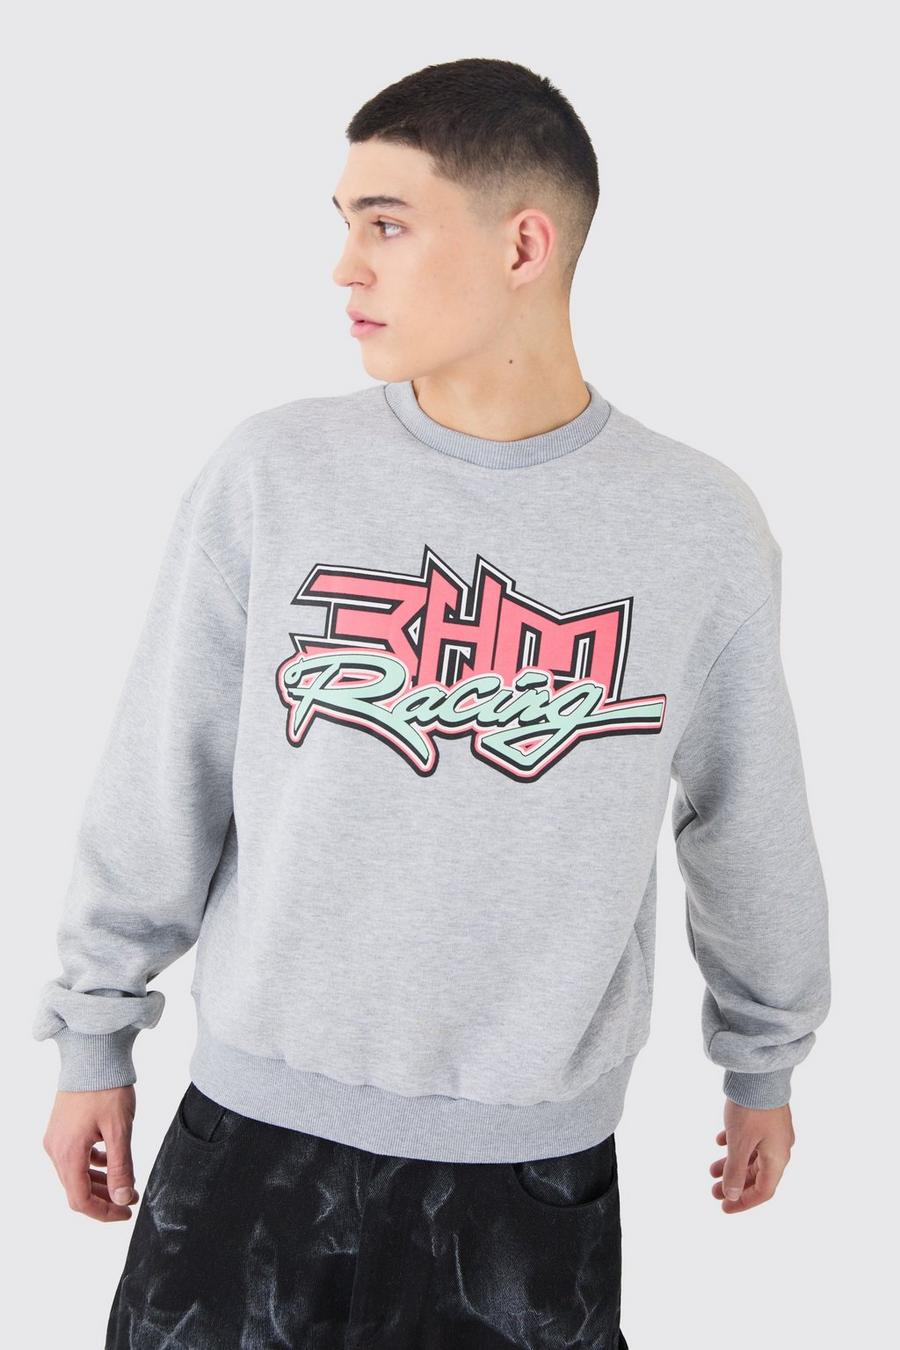 Kastiges Oversize Sweatshirt mit Moto Racing Print, Grey marl